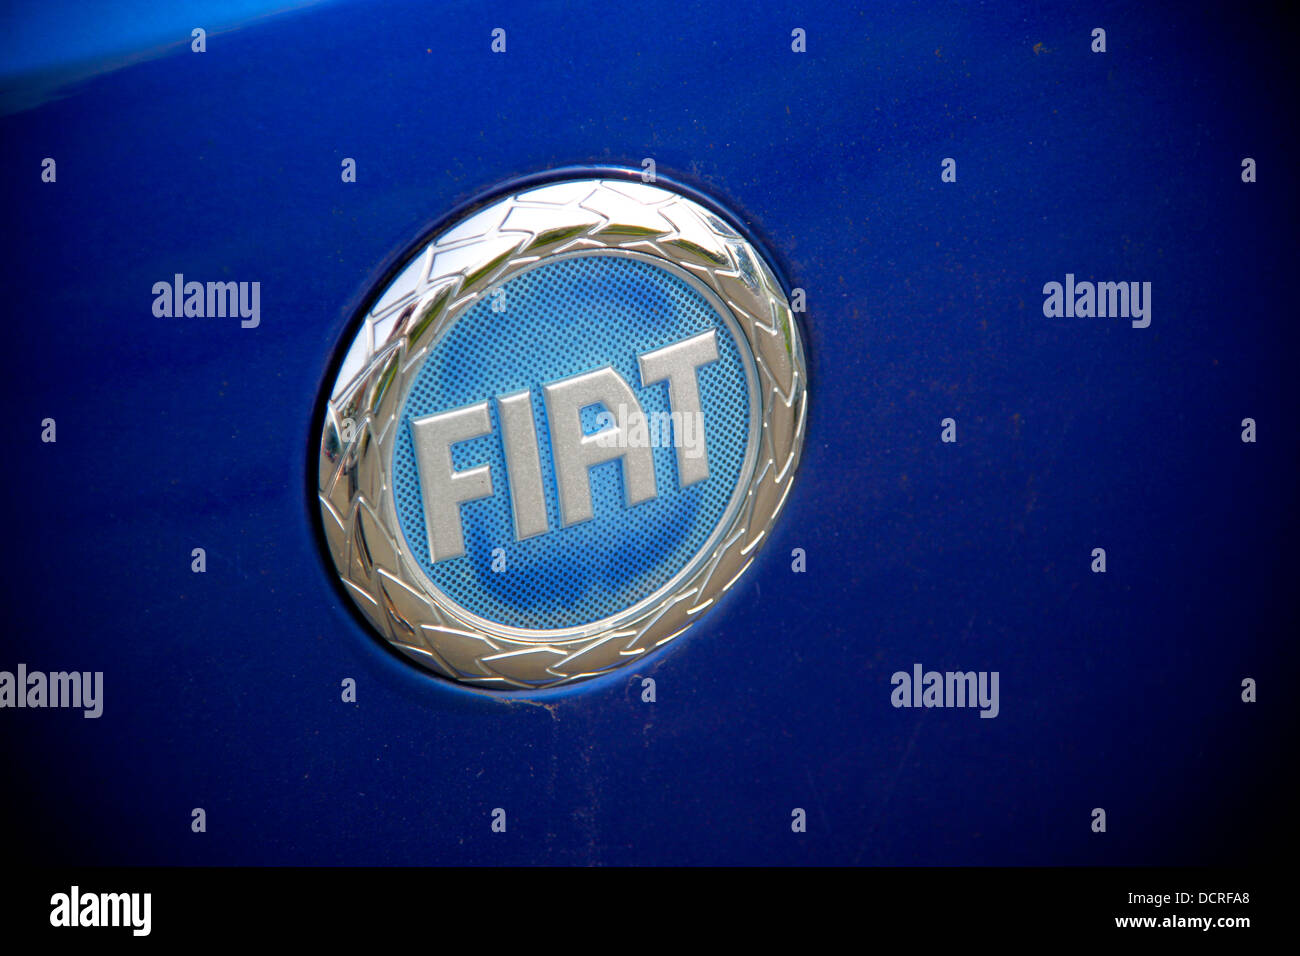 Fiat car badge on blue car Stock Photo